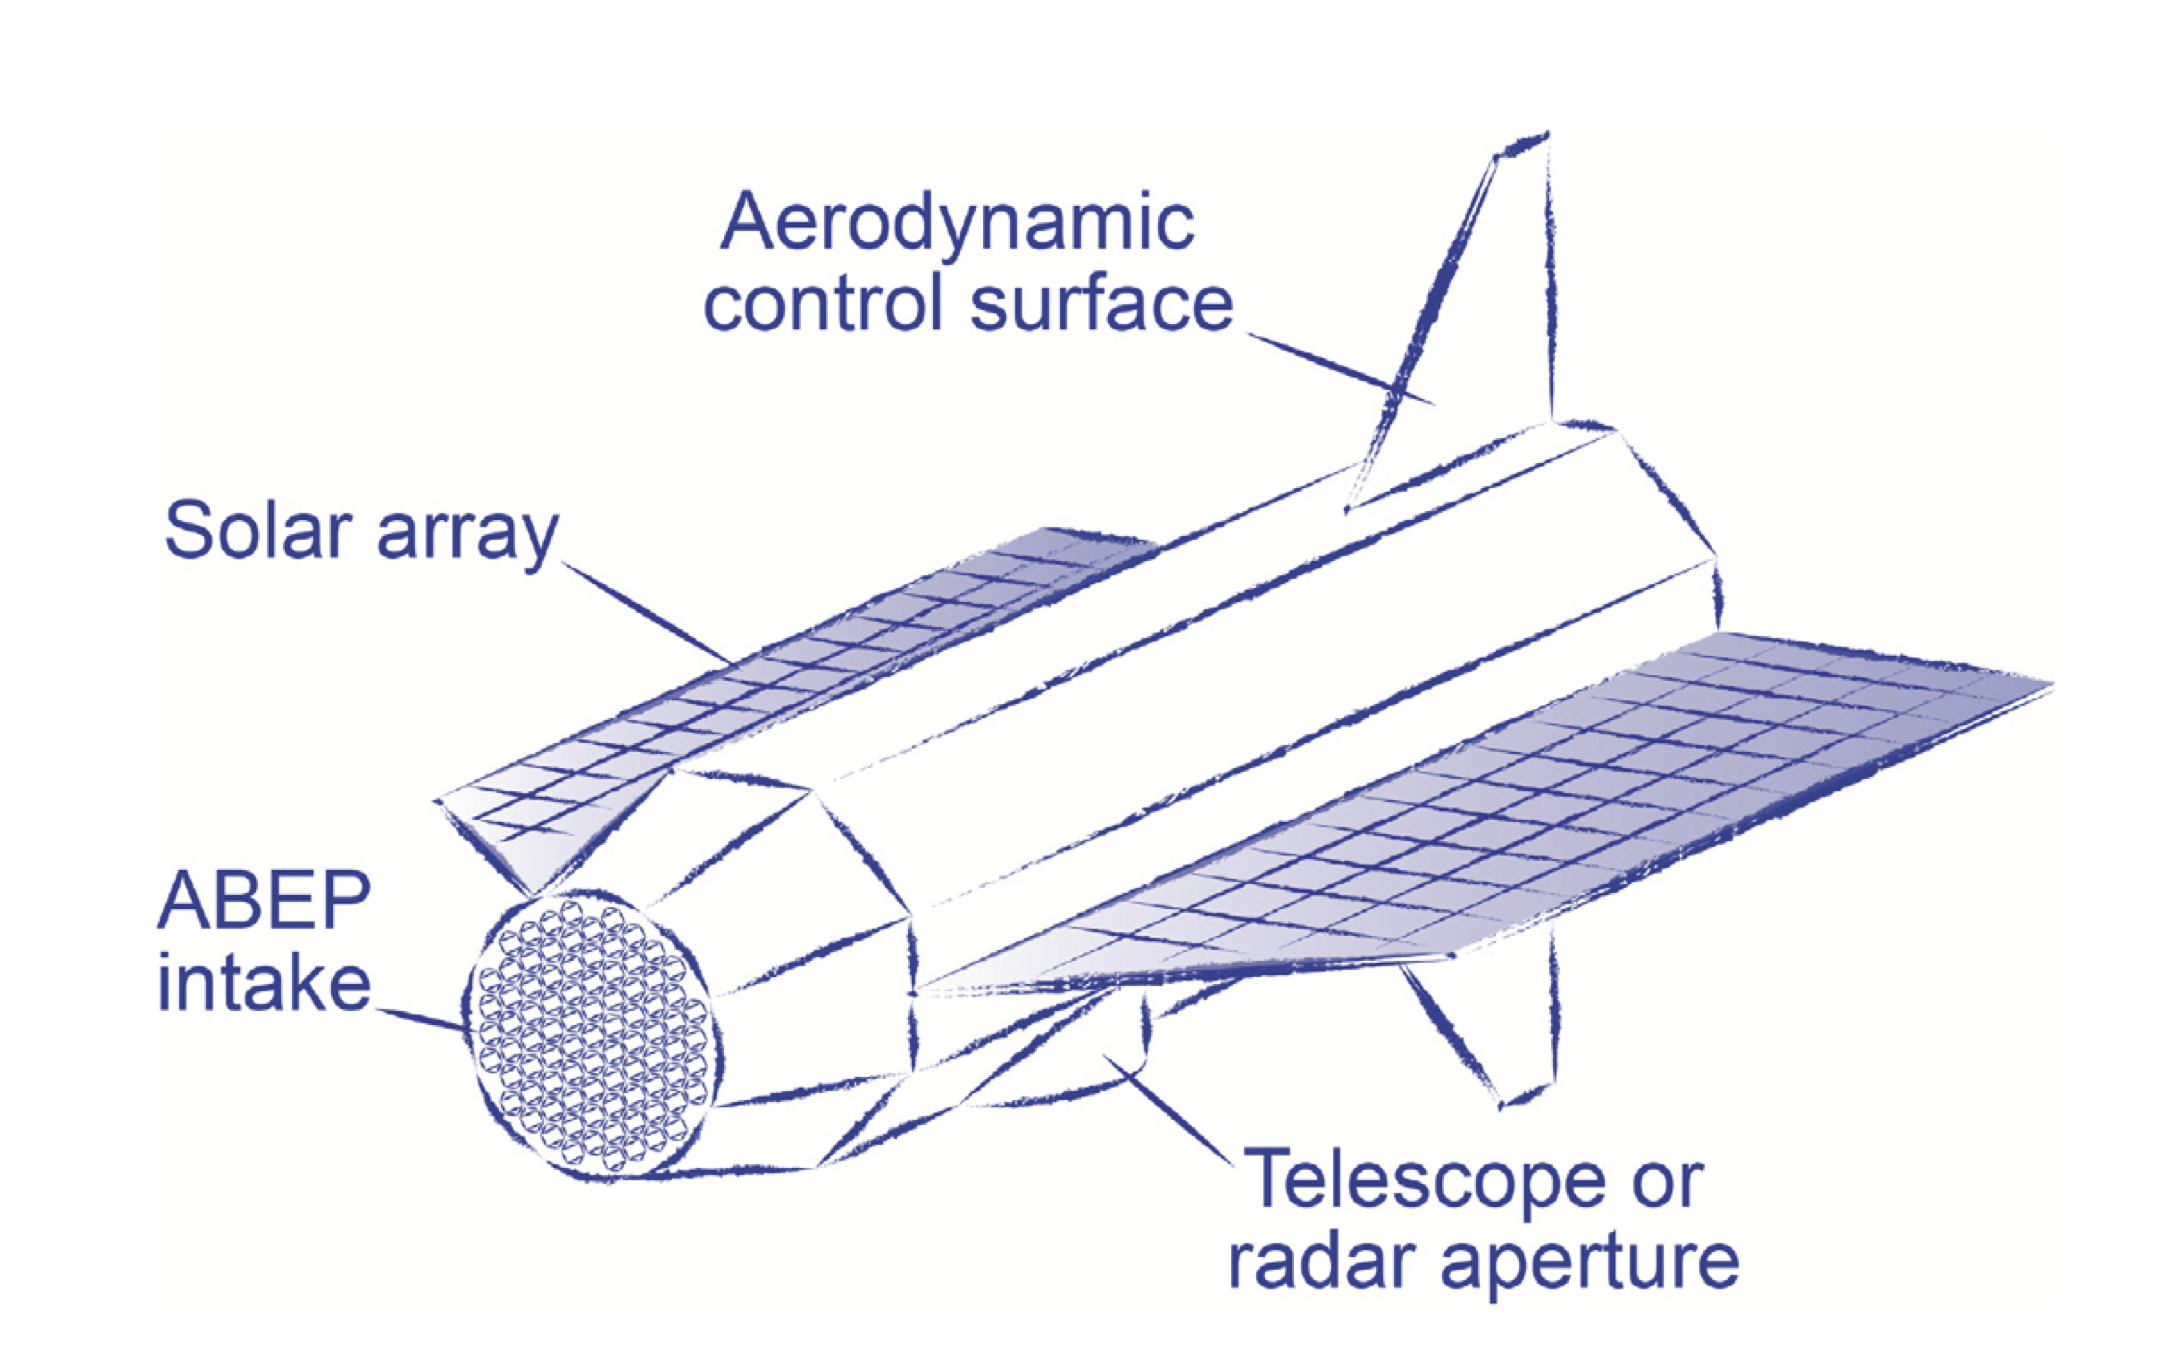 Arrow-like spacecraft